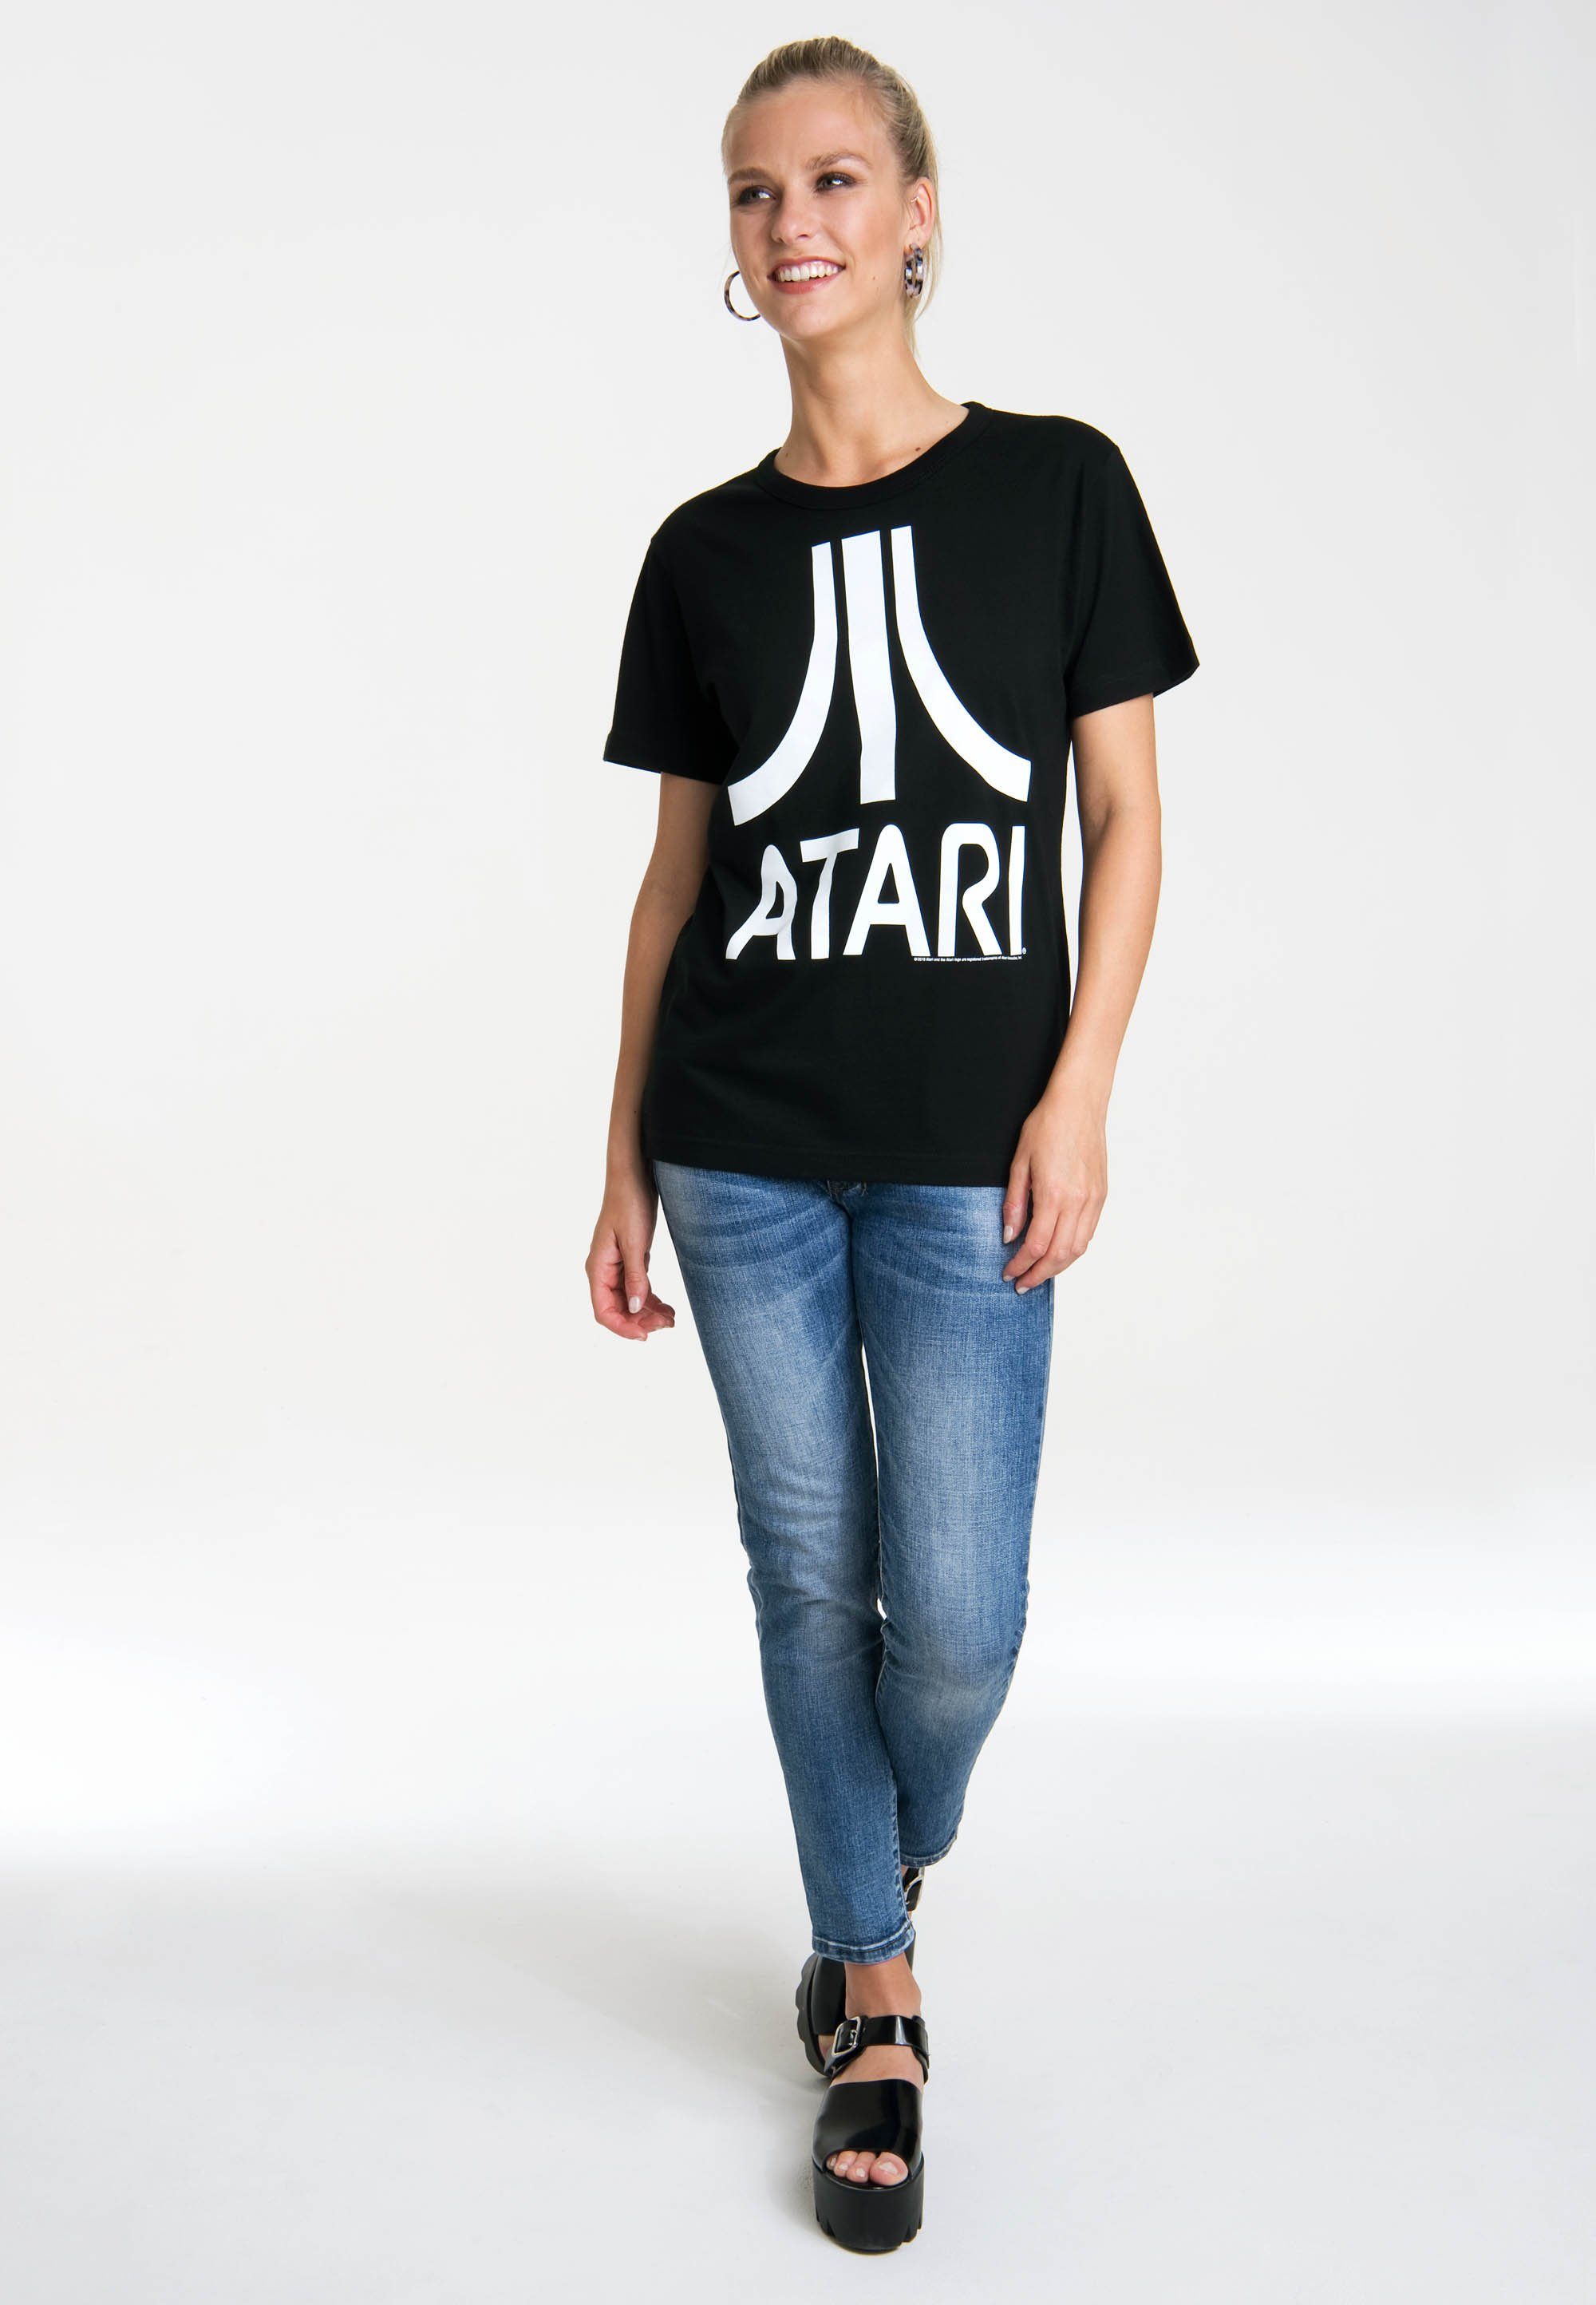 LOGOSHIRT T-Shirt Atari – Logo mit lizenziertem Originaldesign